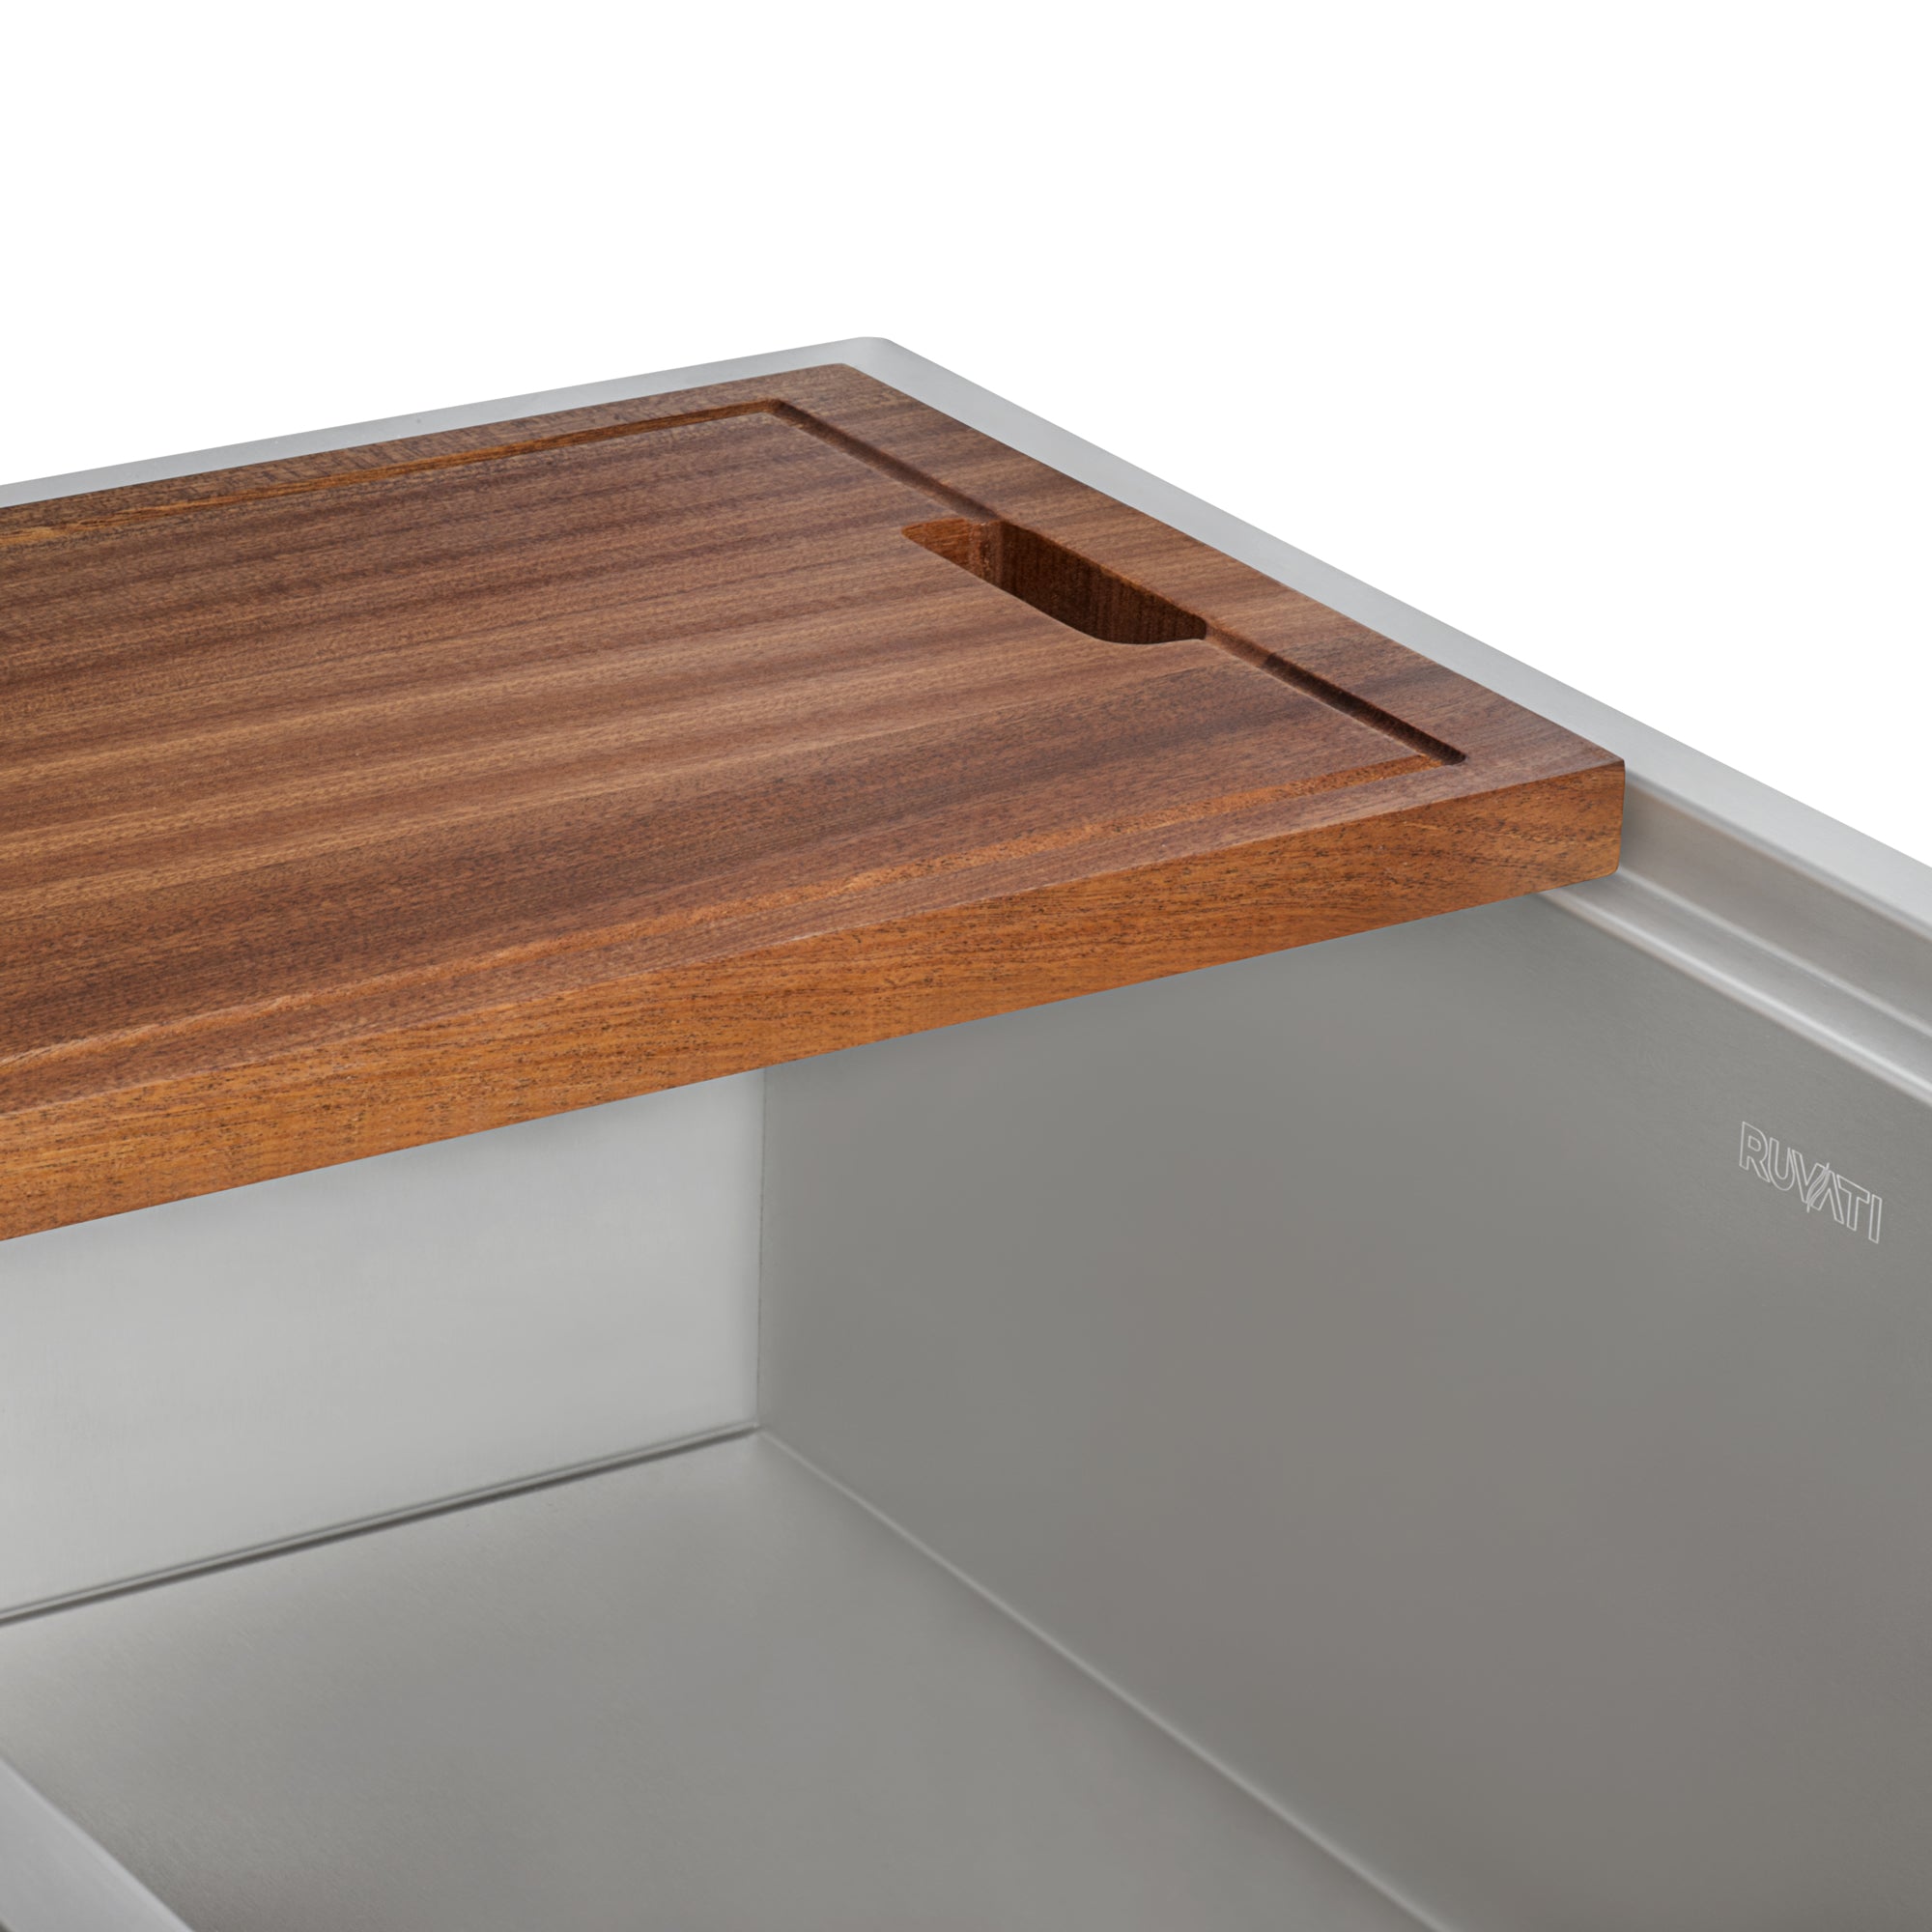 Ruvati 11 x 17 inch Solid Wood Cutting Board for Ruvati Workstation Sinks – RVA1217